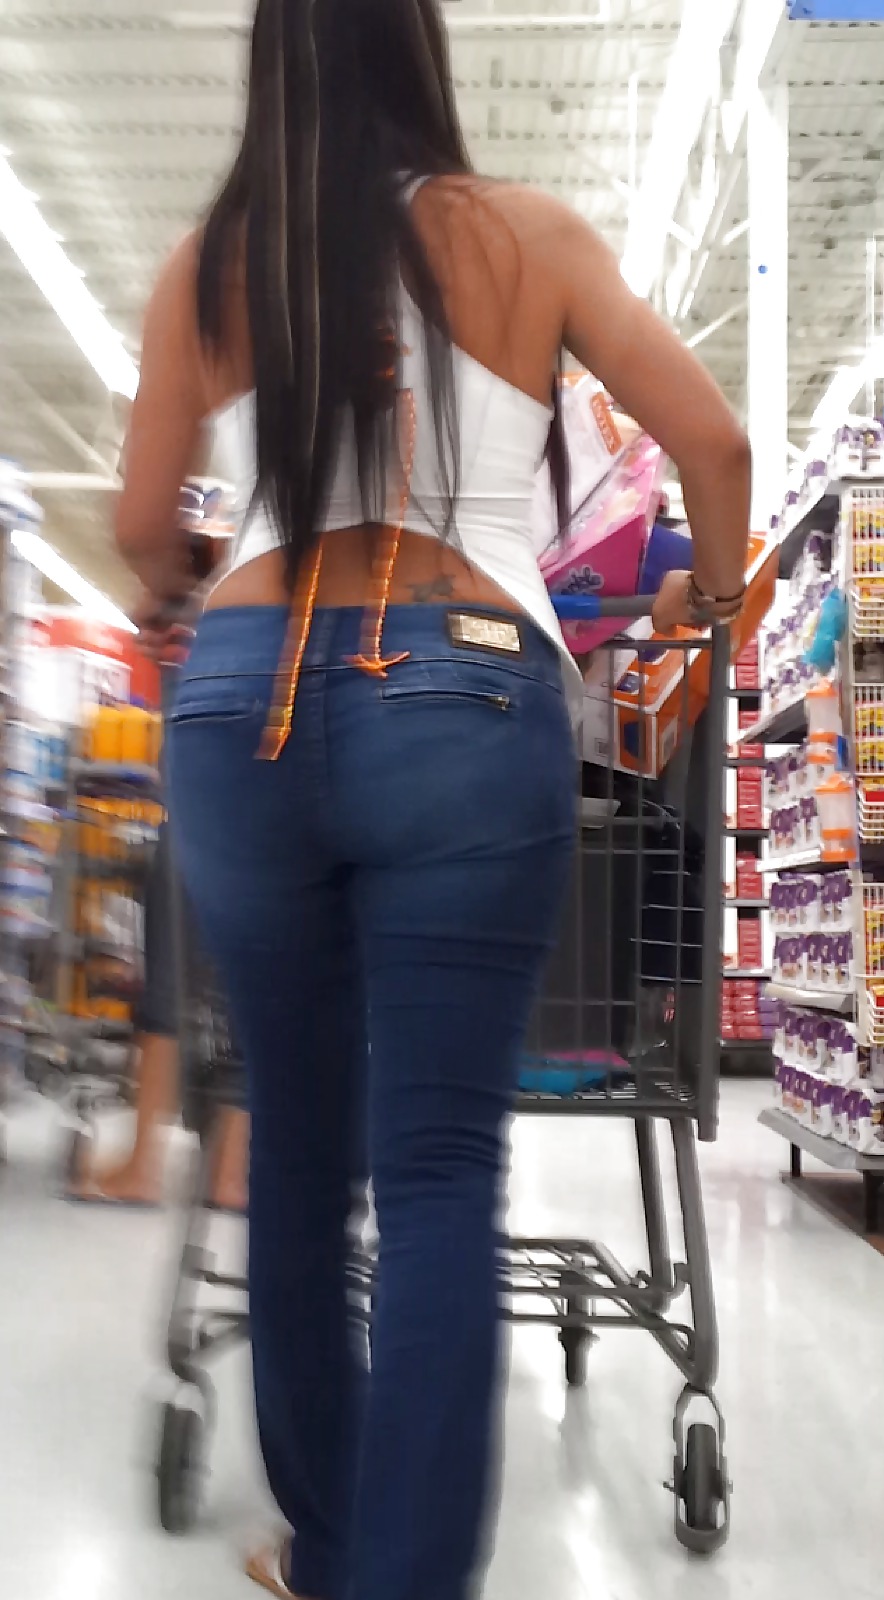 Hott latina milf tight body in jeans voyeur candid
 #19449850